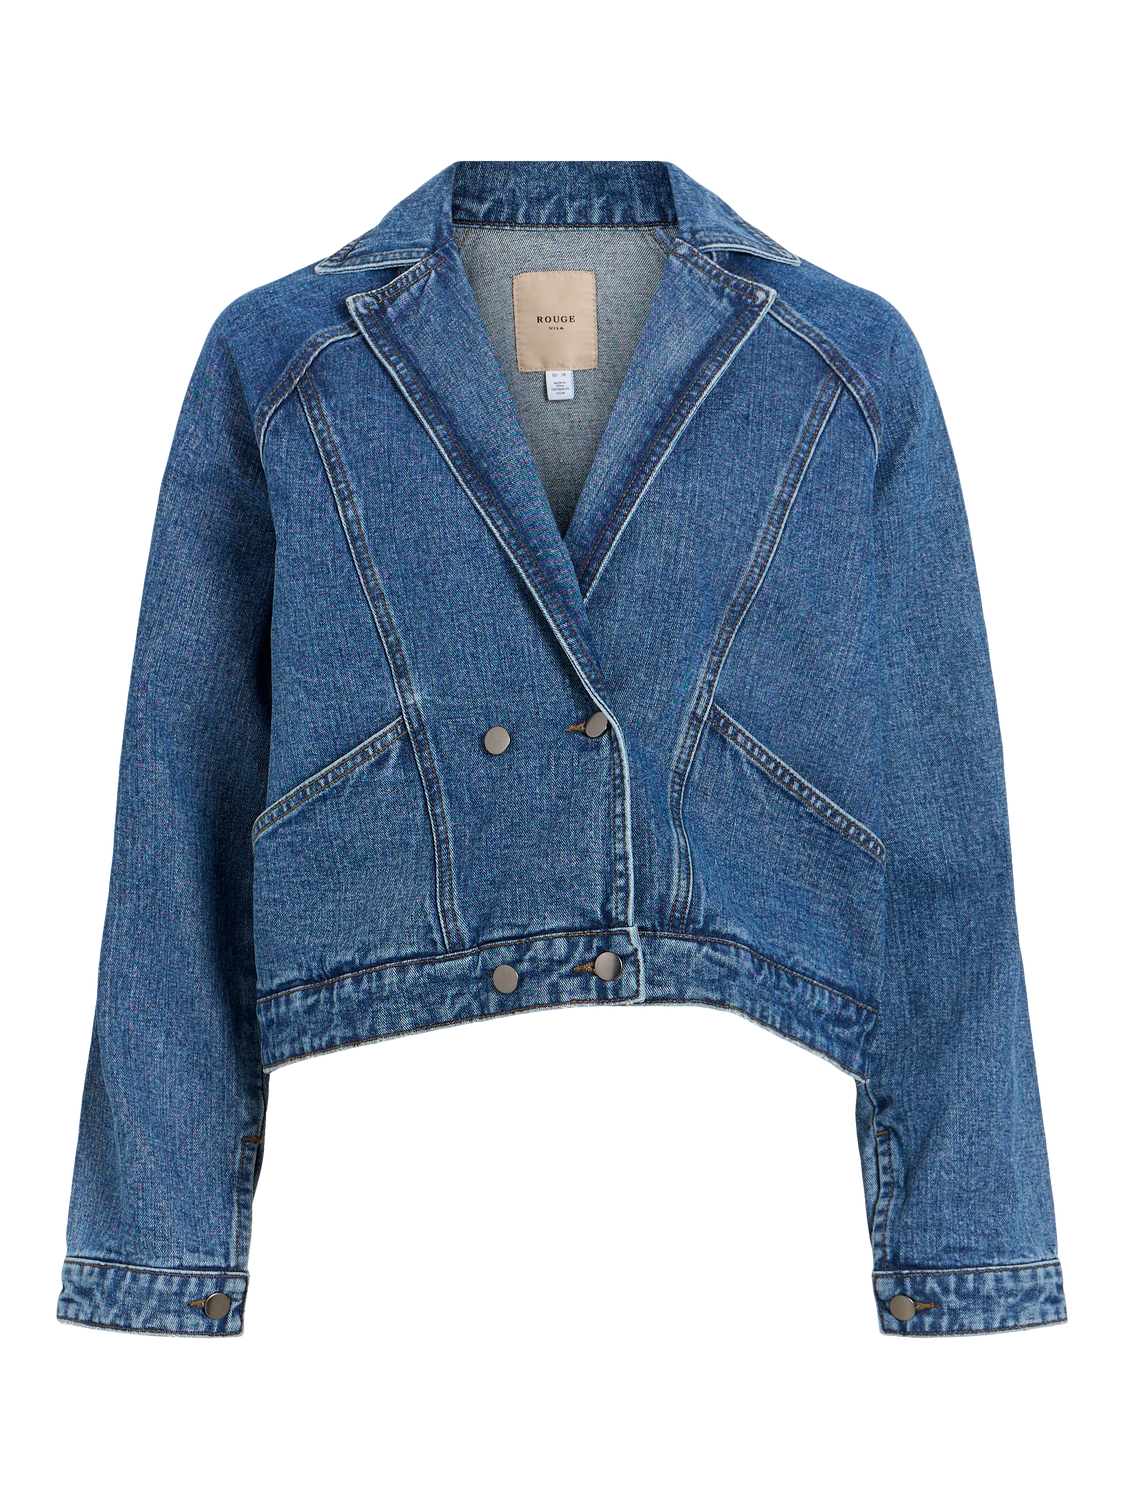 VINORMA Jacket - Medium Blue Denim